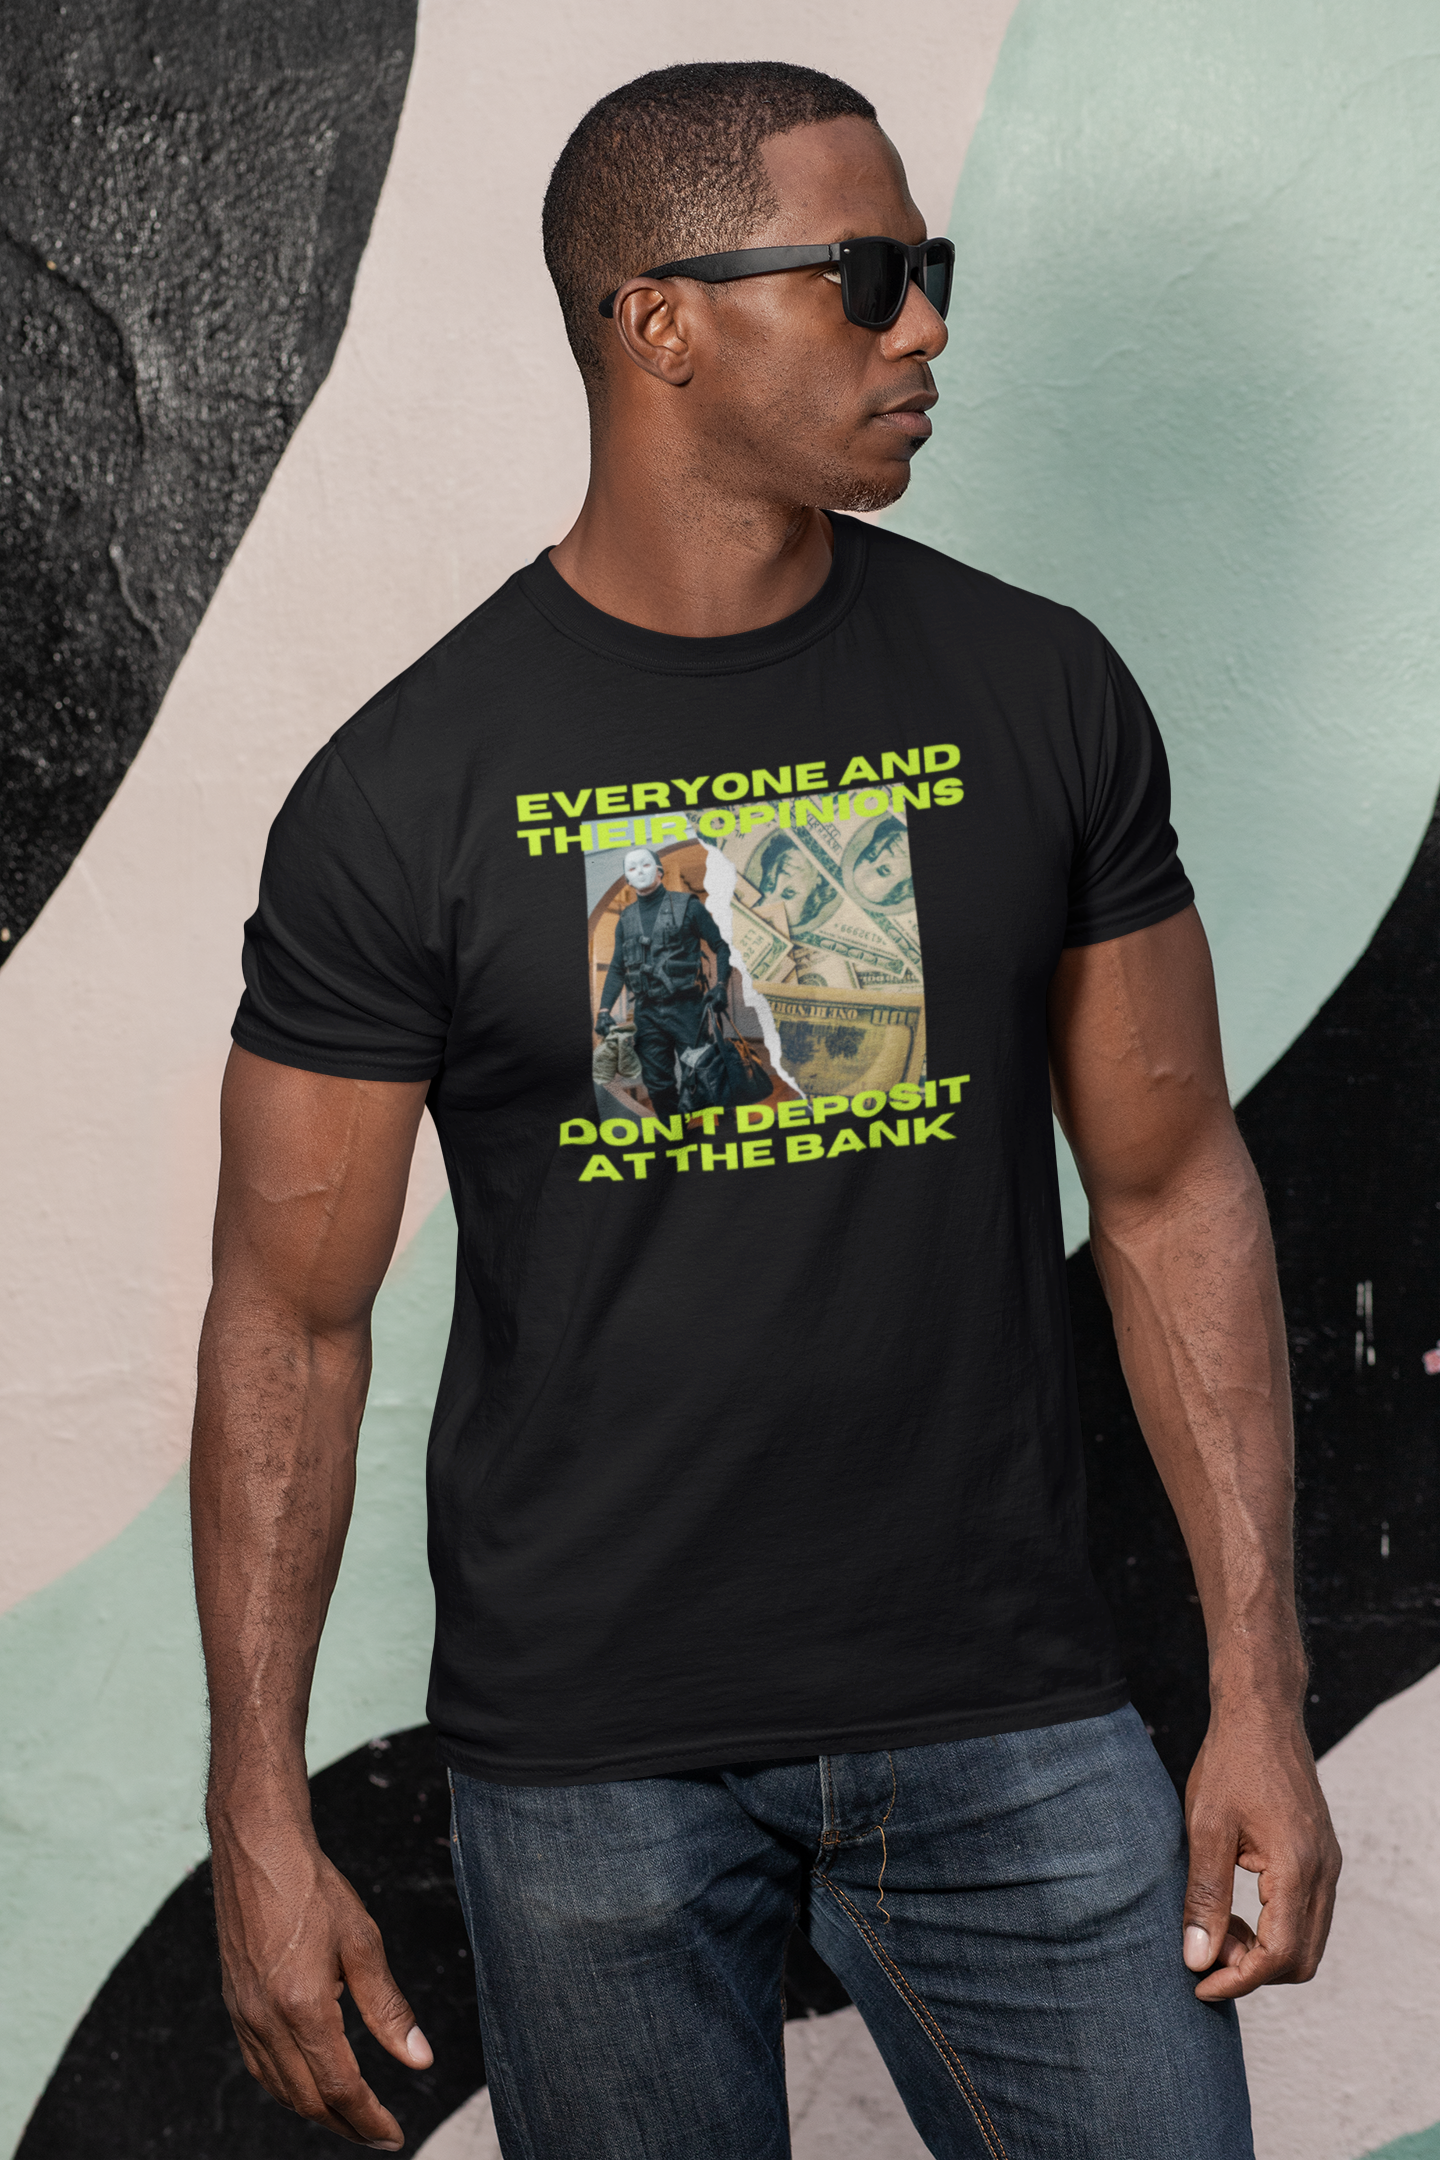 Tit4Tat - "No Interest in Opinion" Men's T-Shirt